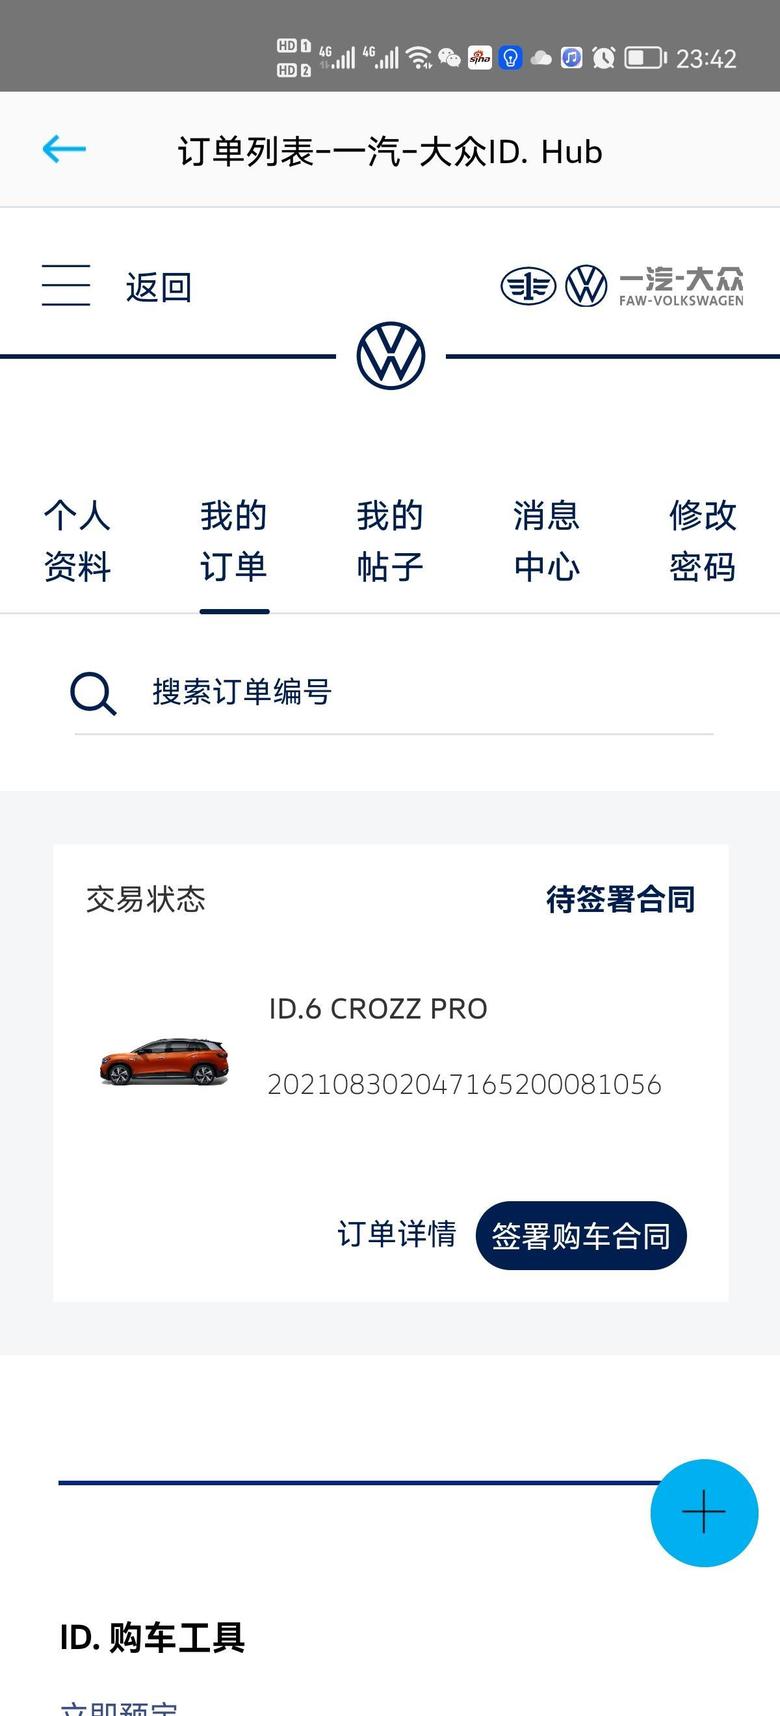 id.6 crozz 是不是落定金后，要签署合同才能显示到购车的流程？